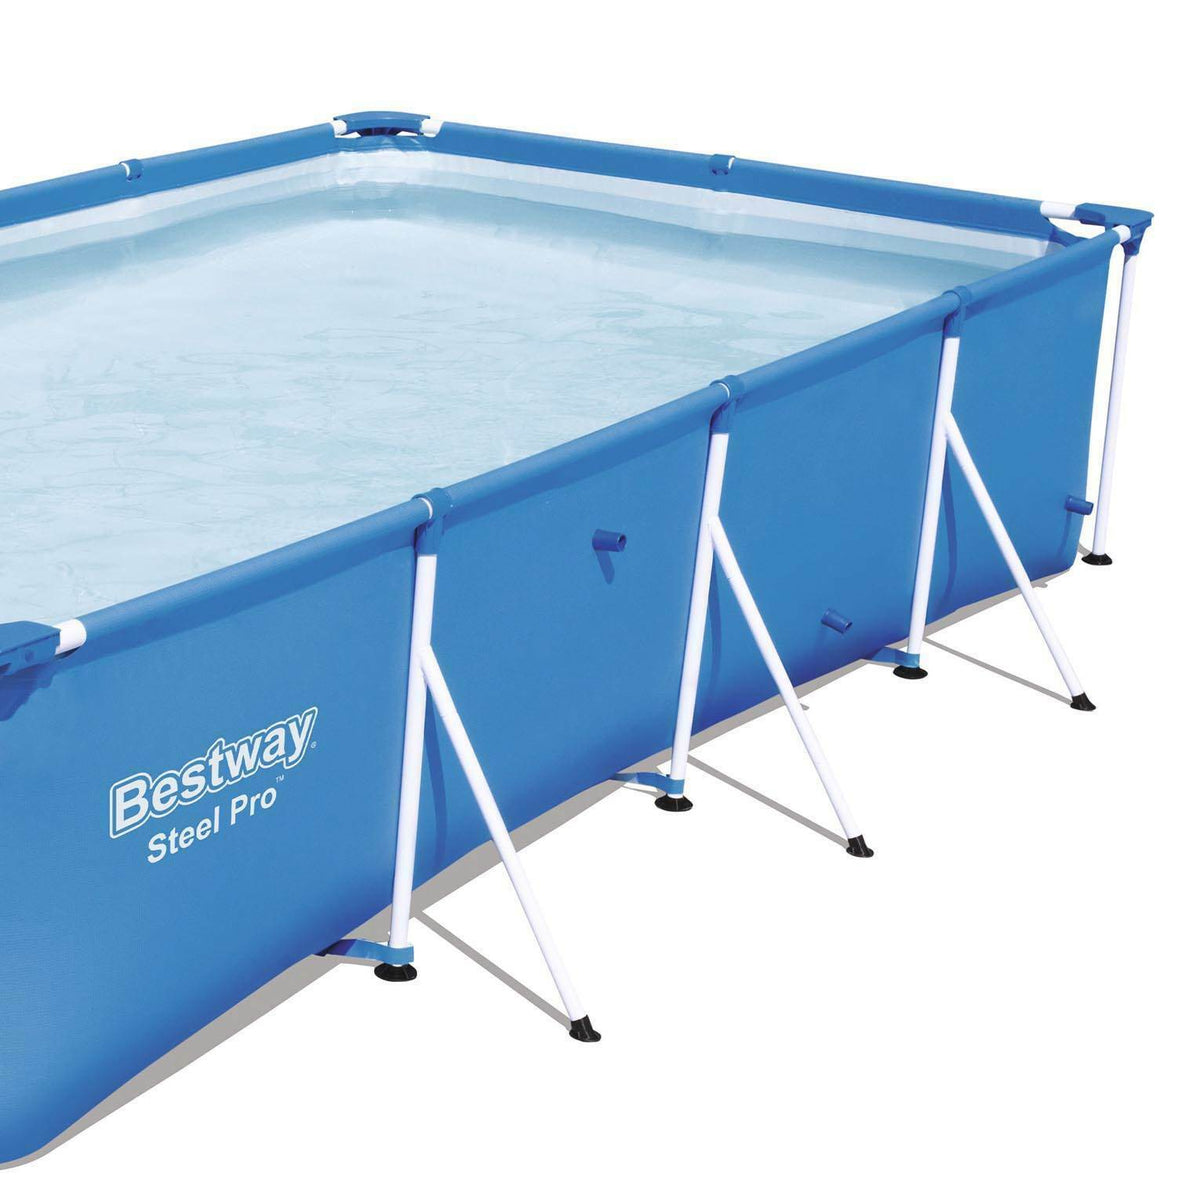 Bestway Steel Pro 13' x 7' x 32" Rectangular Frame Above Ground Swimming Pool